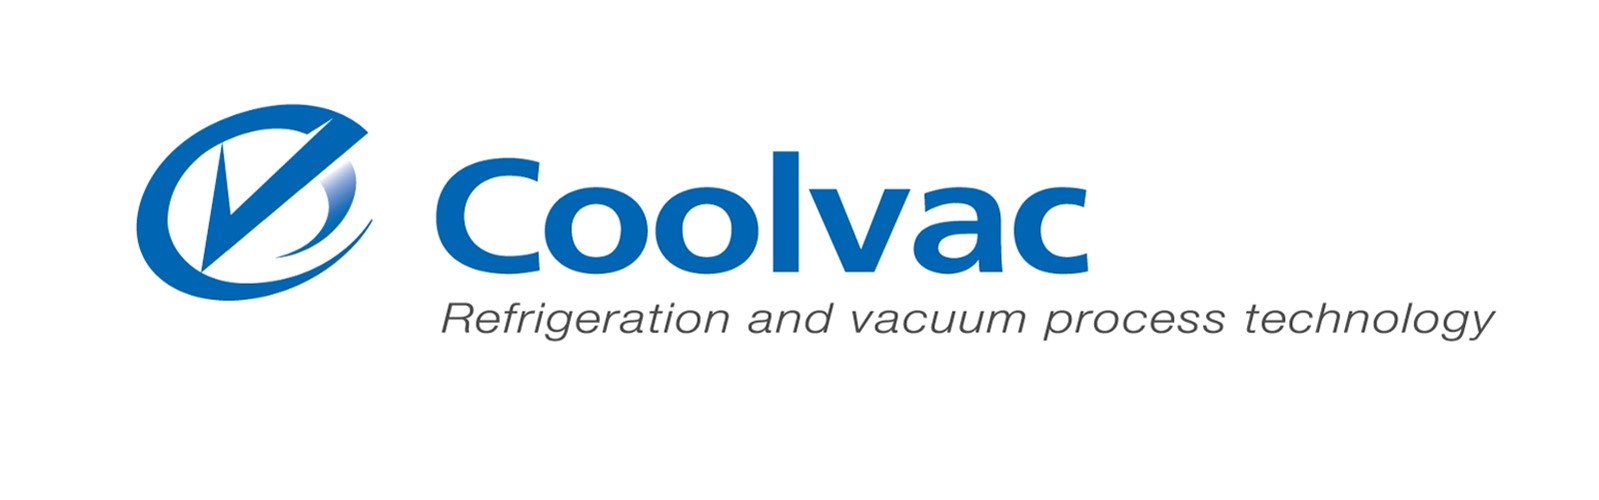 Coolvac - refrigeration and vacuum process technology